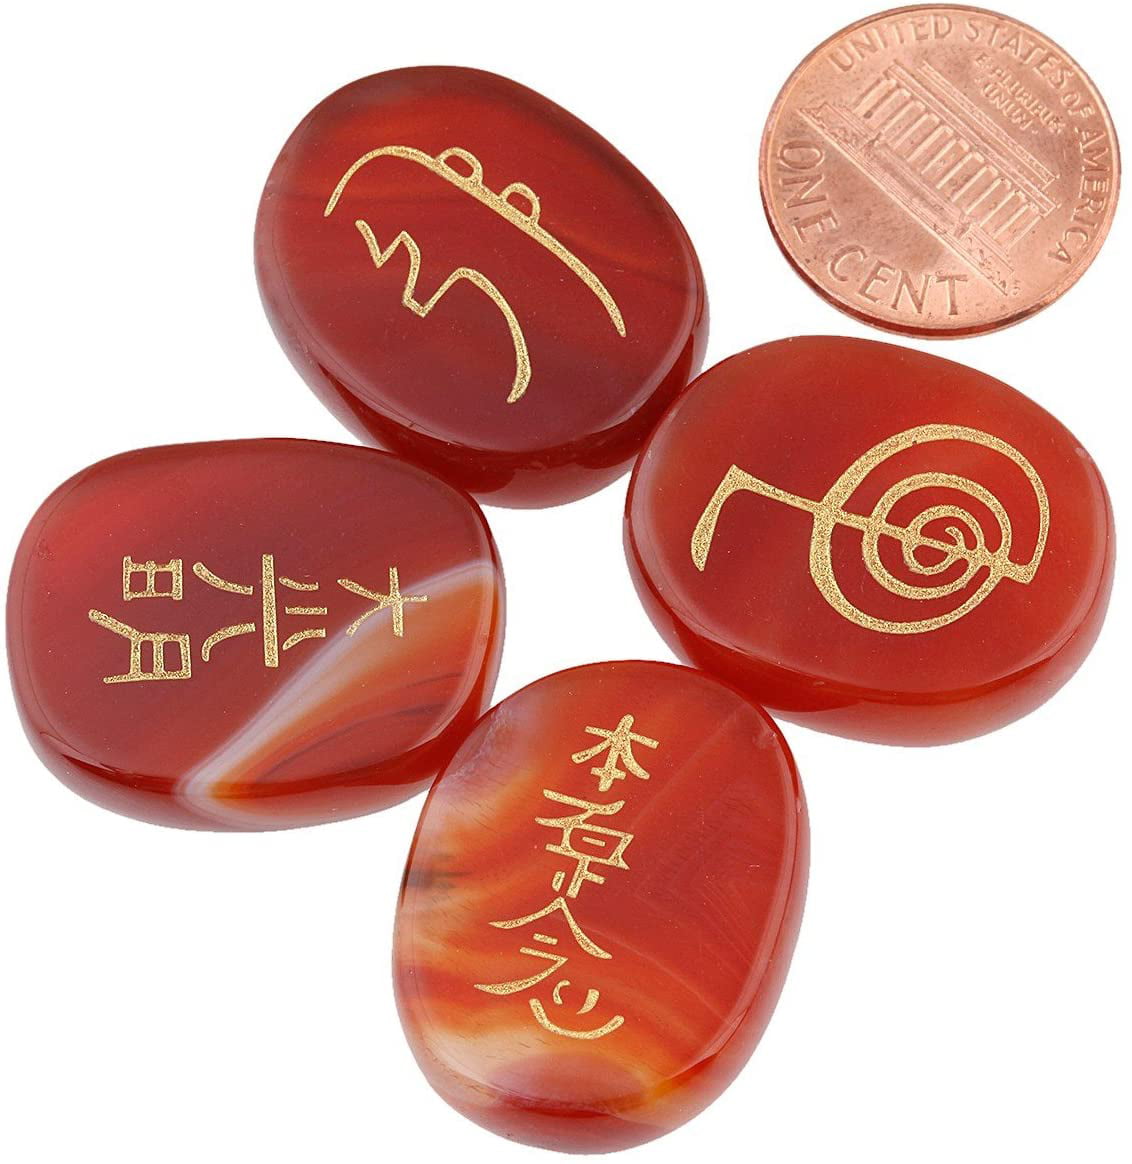 1 INCH Natural Red Jasper Engraved Healing Balance Usui Reiki Symbols Palm Stone 